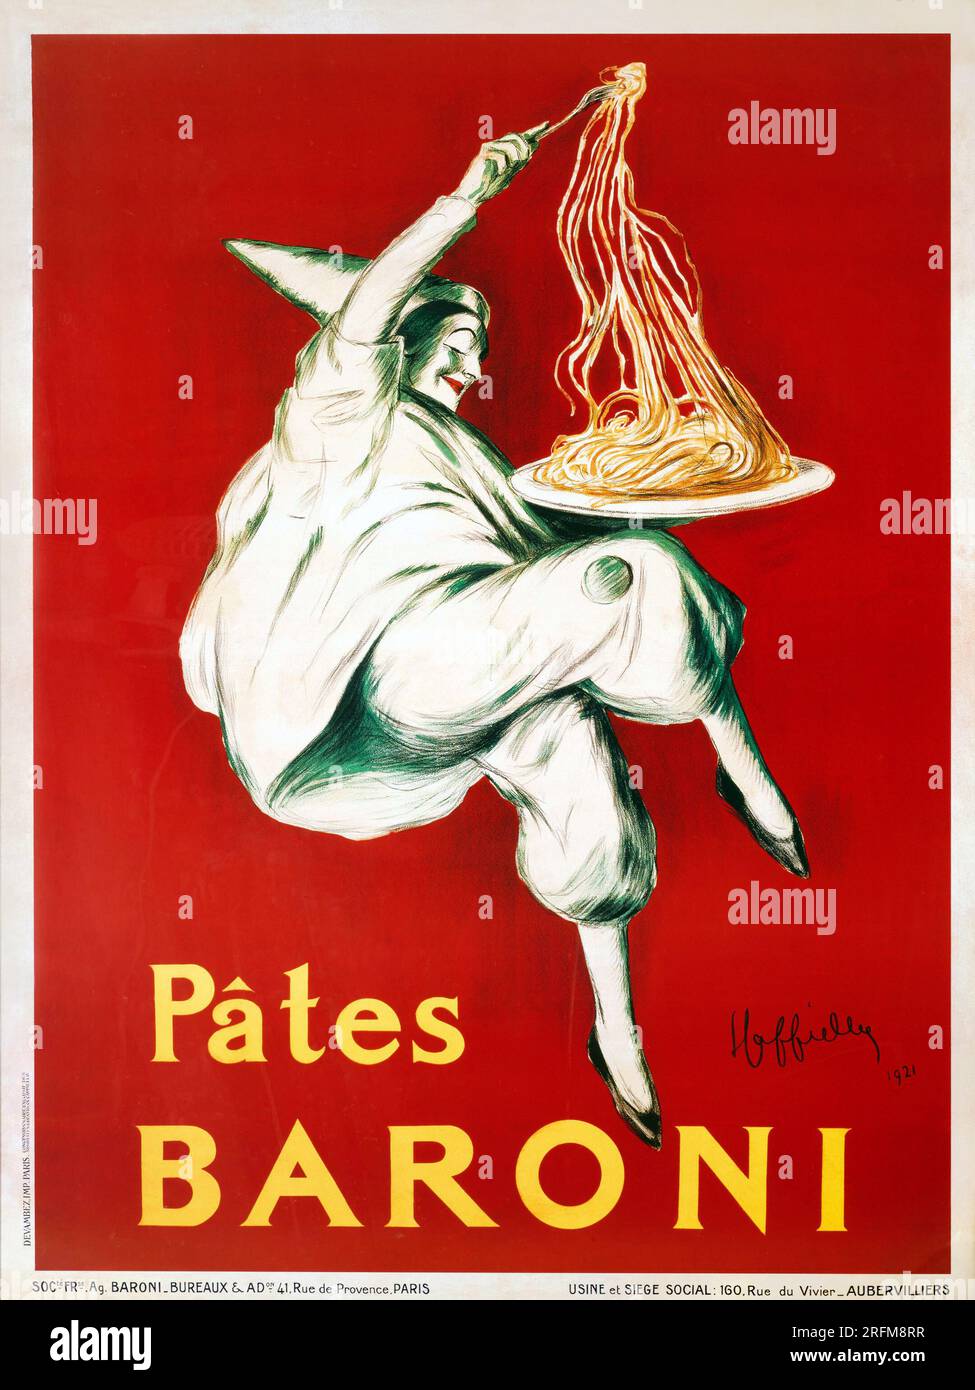 Pâtes Baroni - Vintage advertisement poster by Leonetto Cappiello Stock Photo